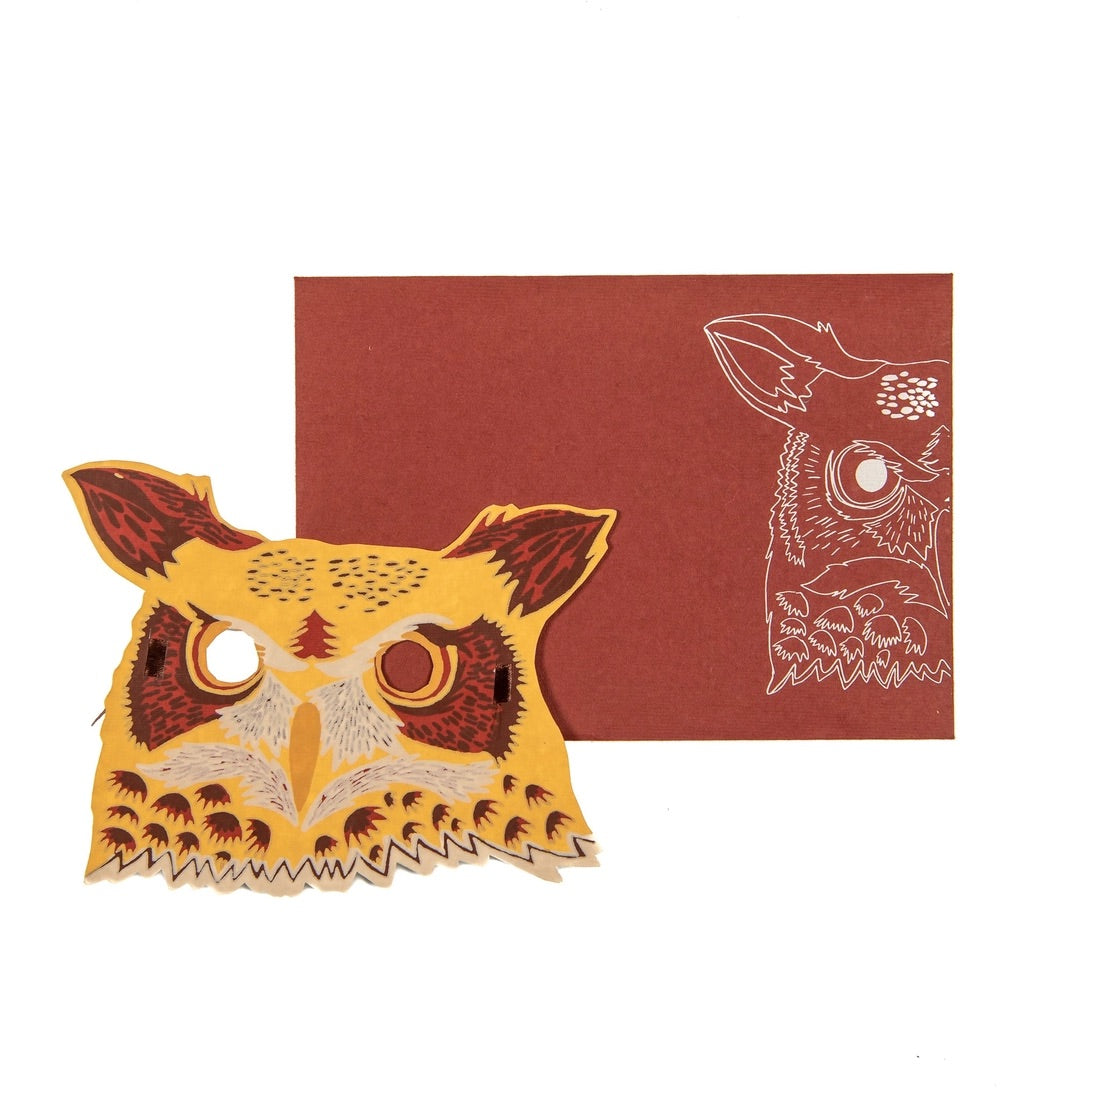 Owl Mask Greetings Card